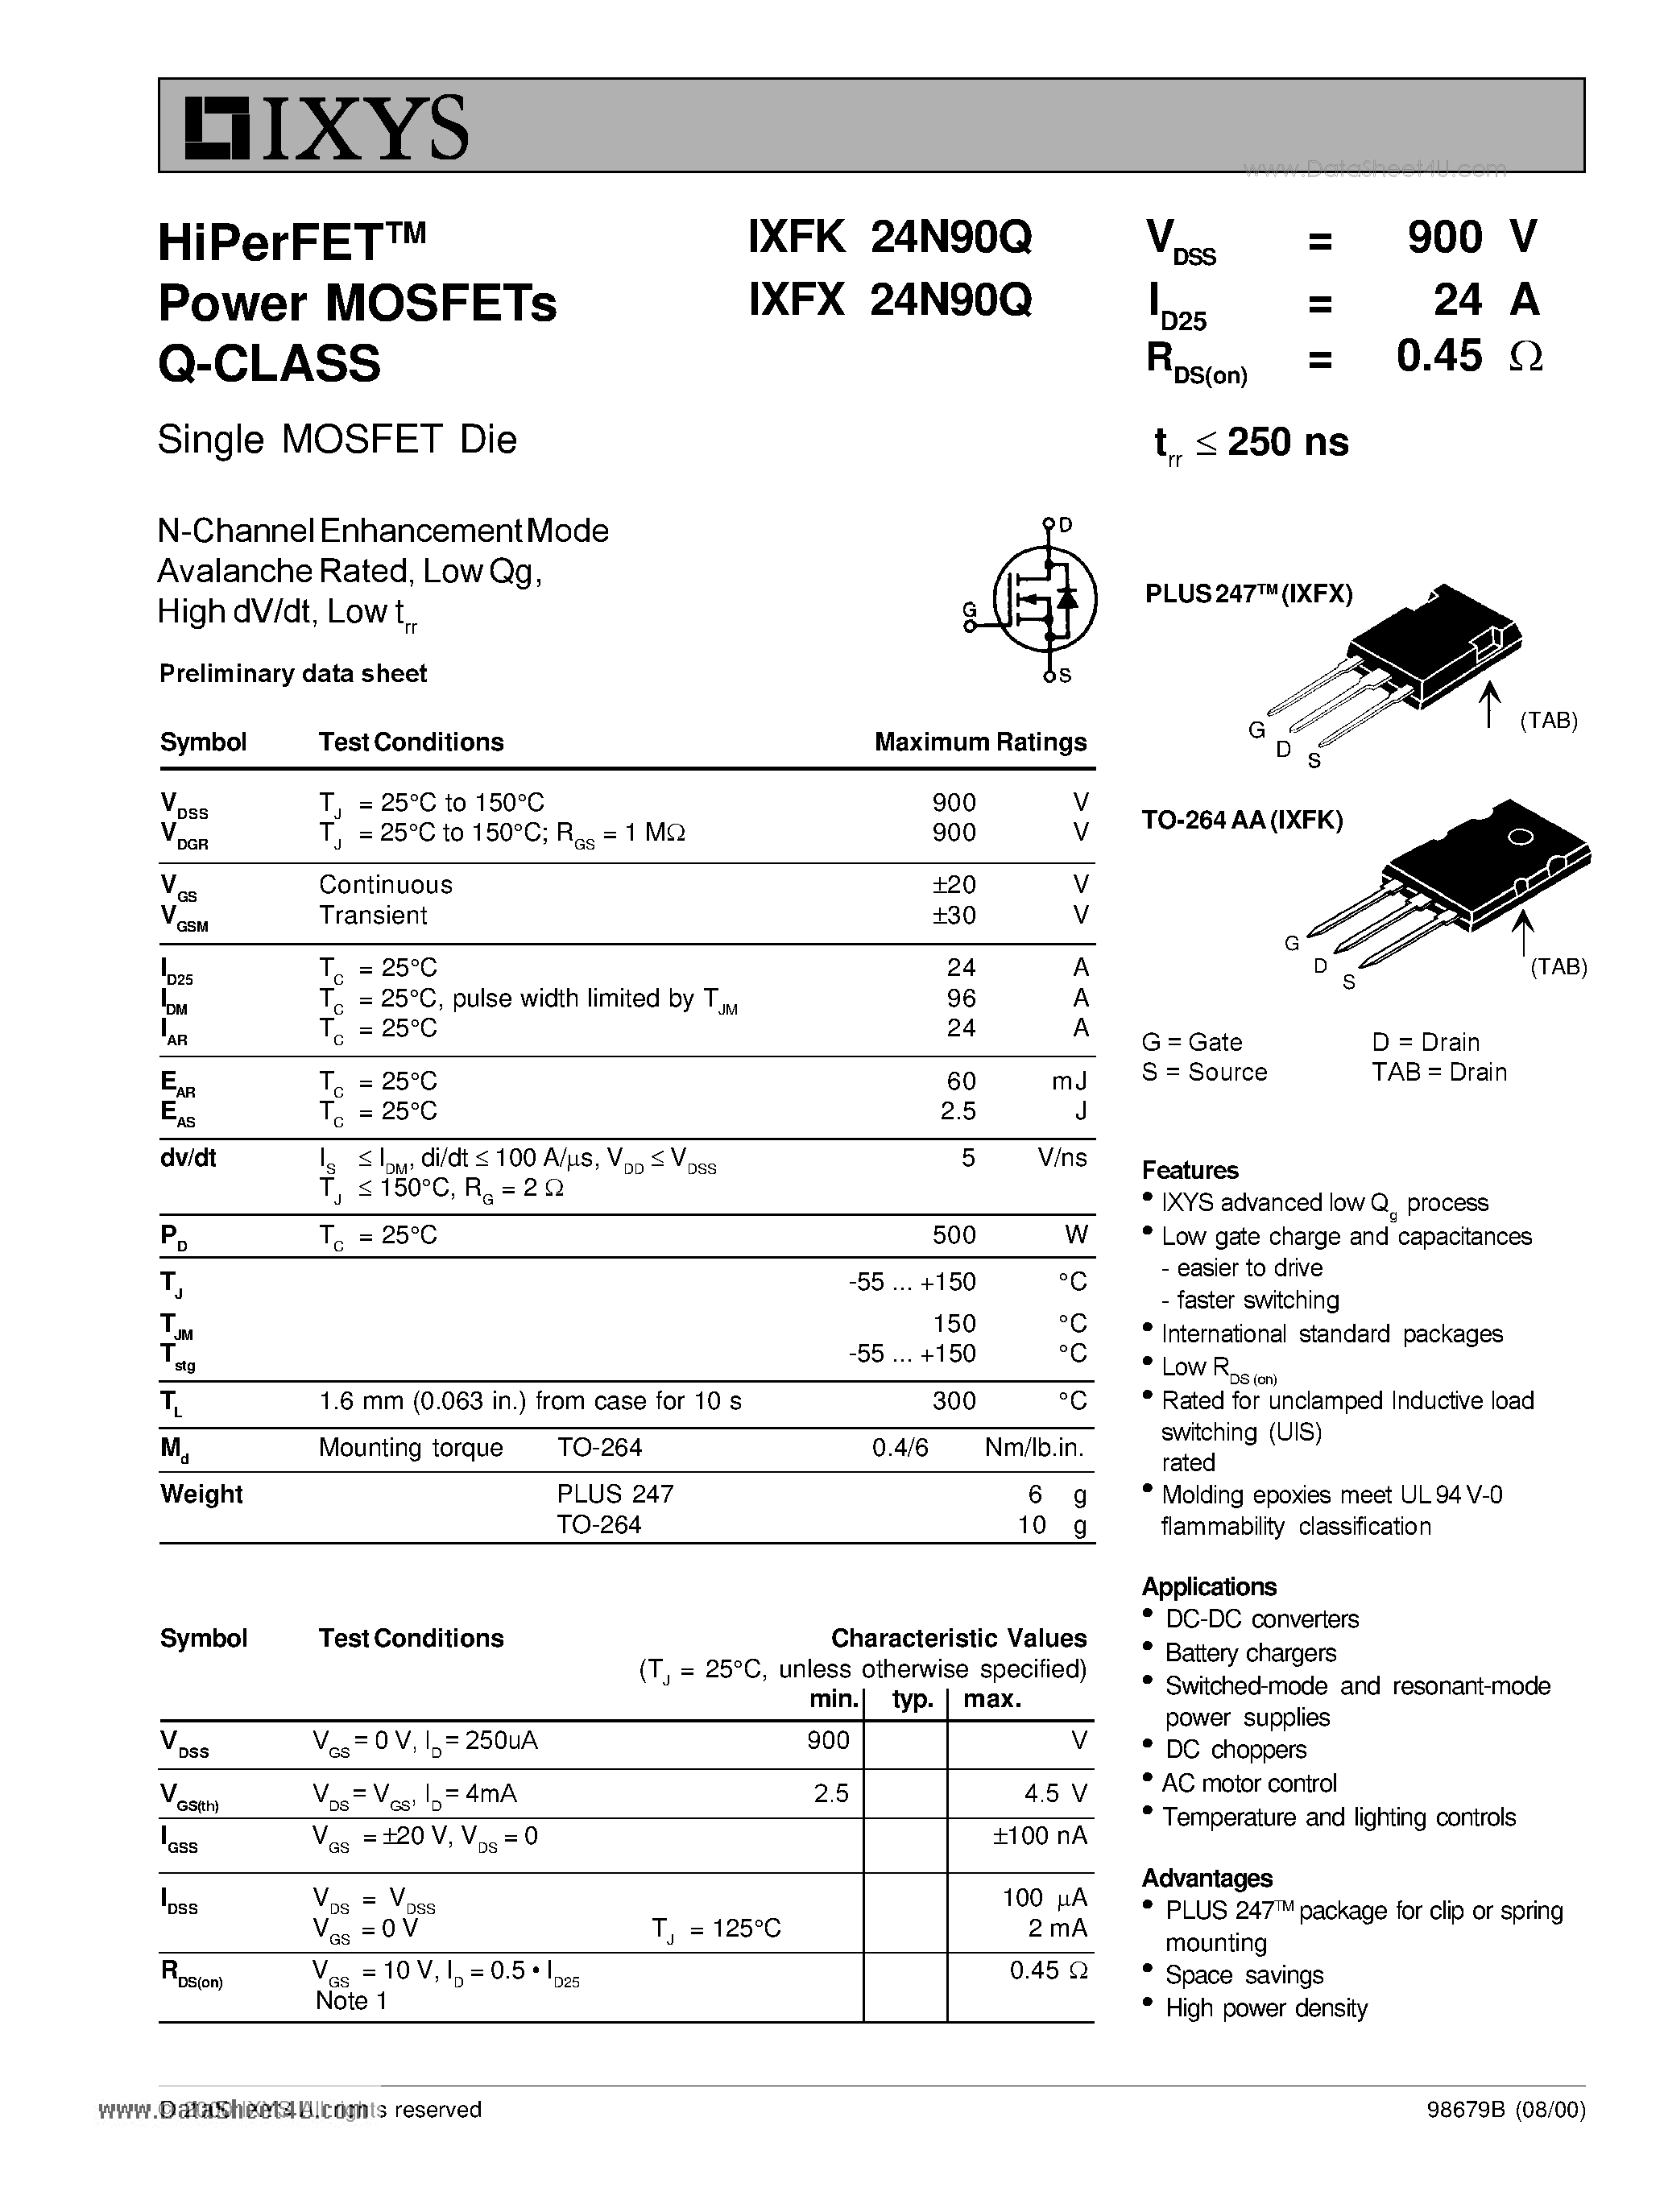 Datasheet IXFK24N90Q - HiPerFET Power MOSFETs Q-Class page 1